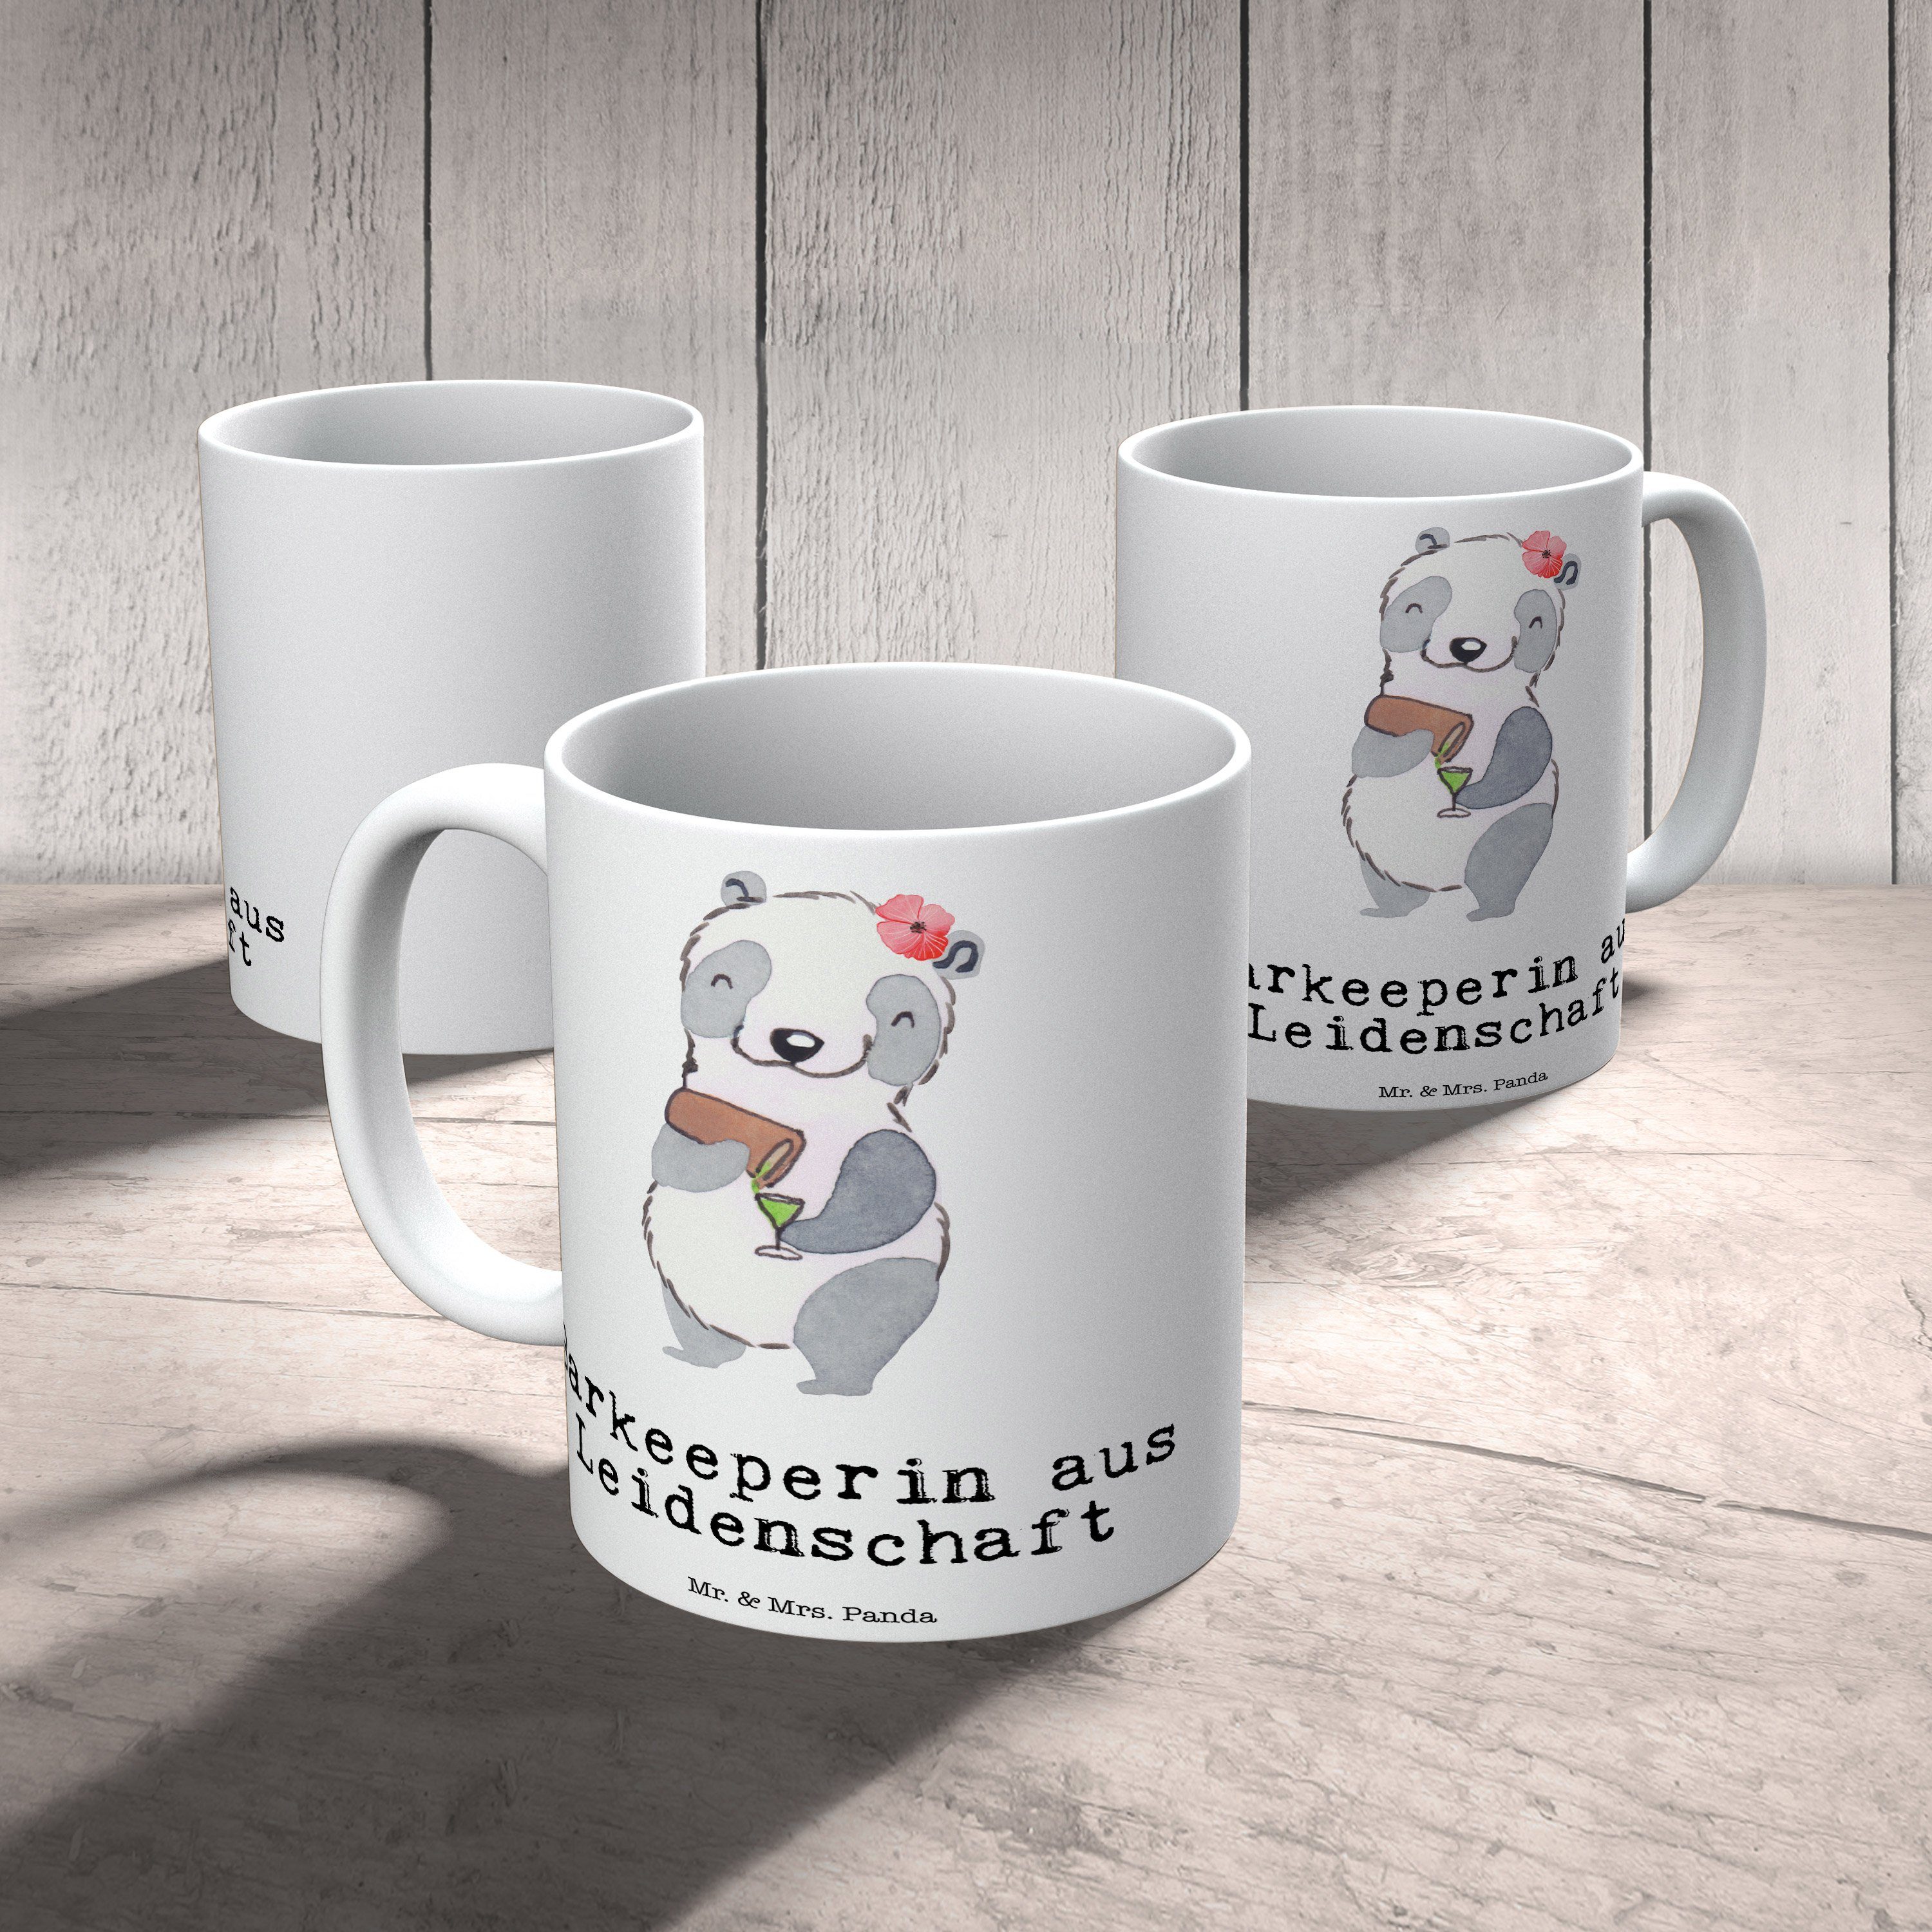 Mr. Geschenk, Mrs. Weiß - & Tasse Barkeeperin Keramik Panda aus Kaffee, Barbesitzerin, - Leidenschaft